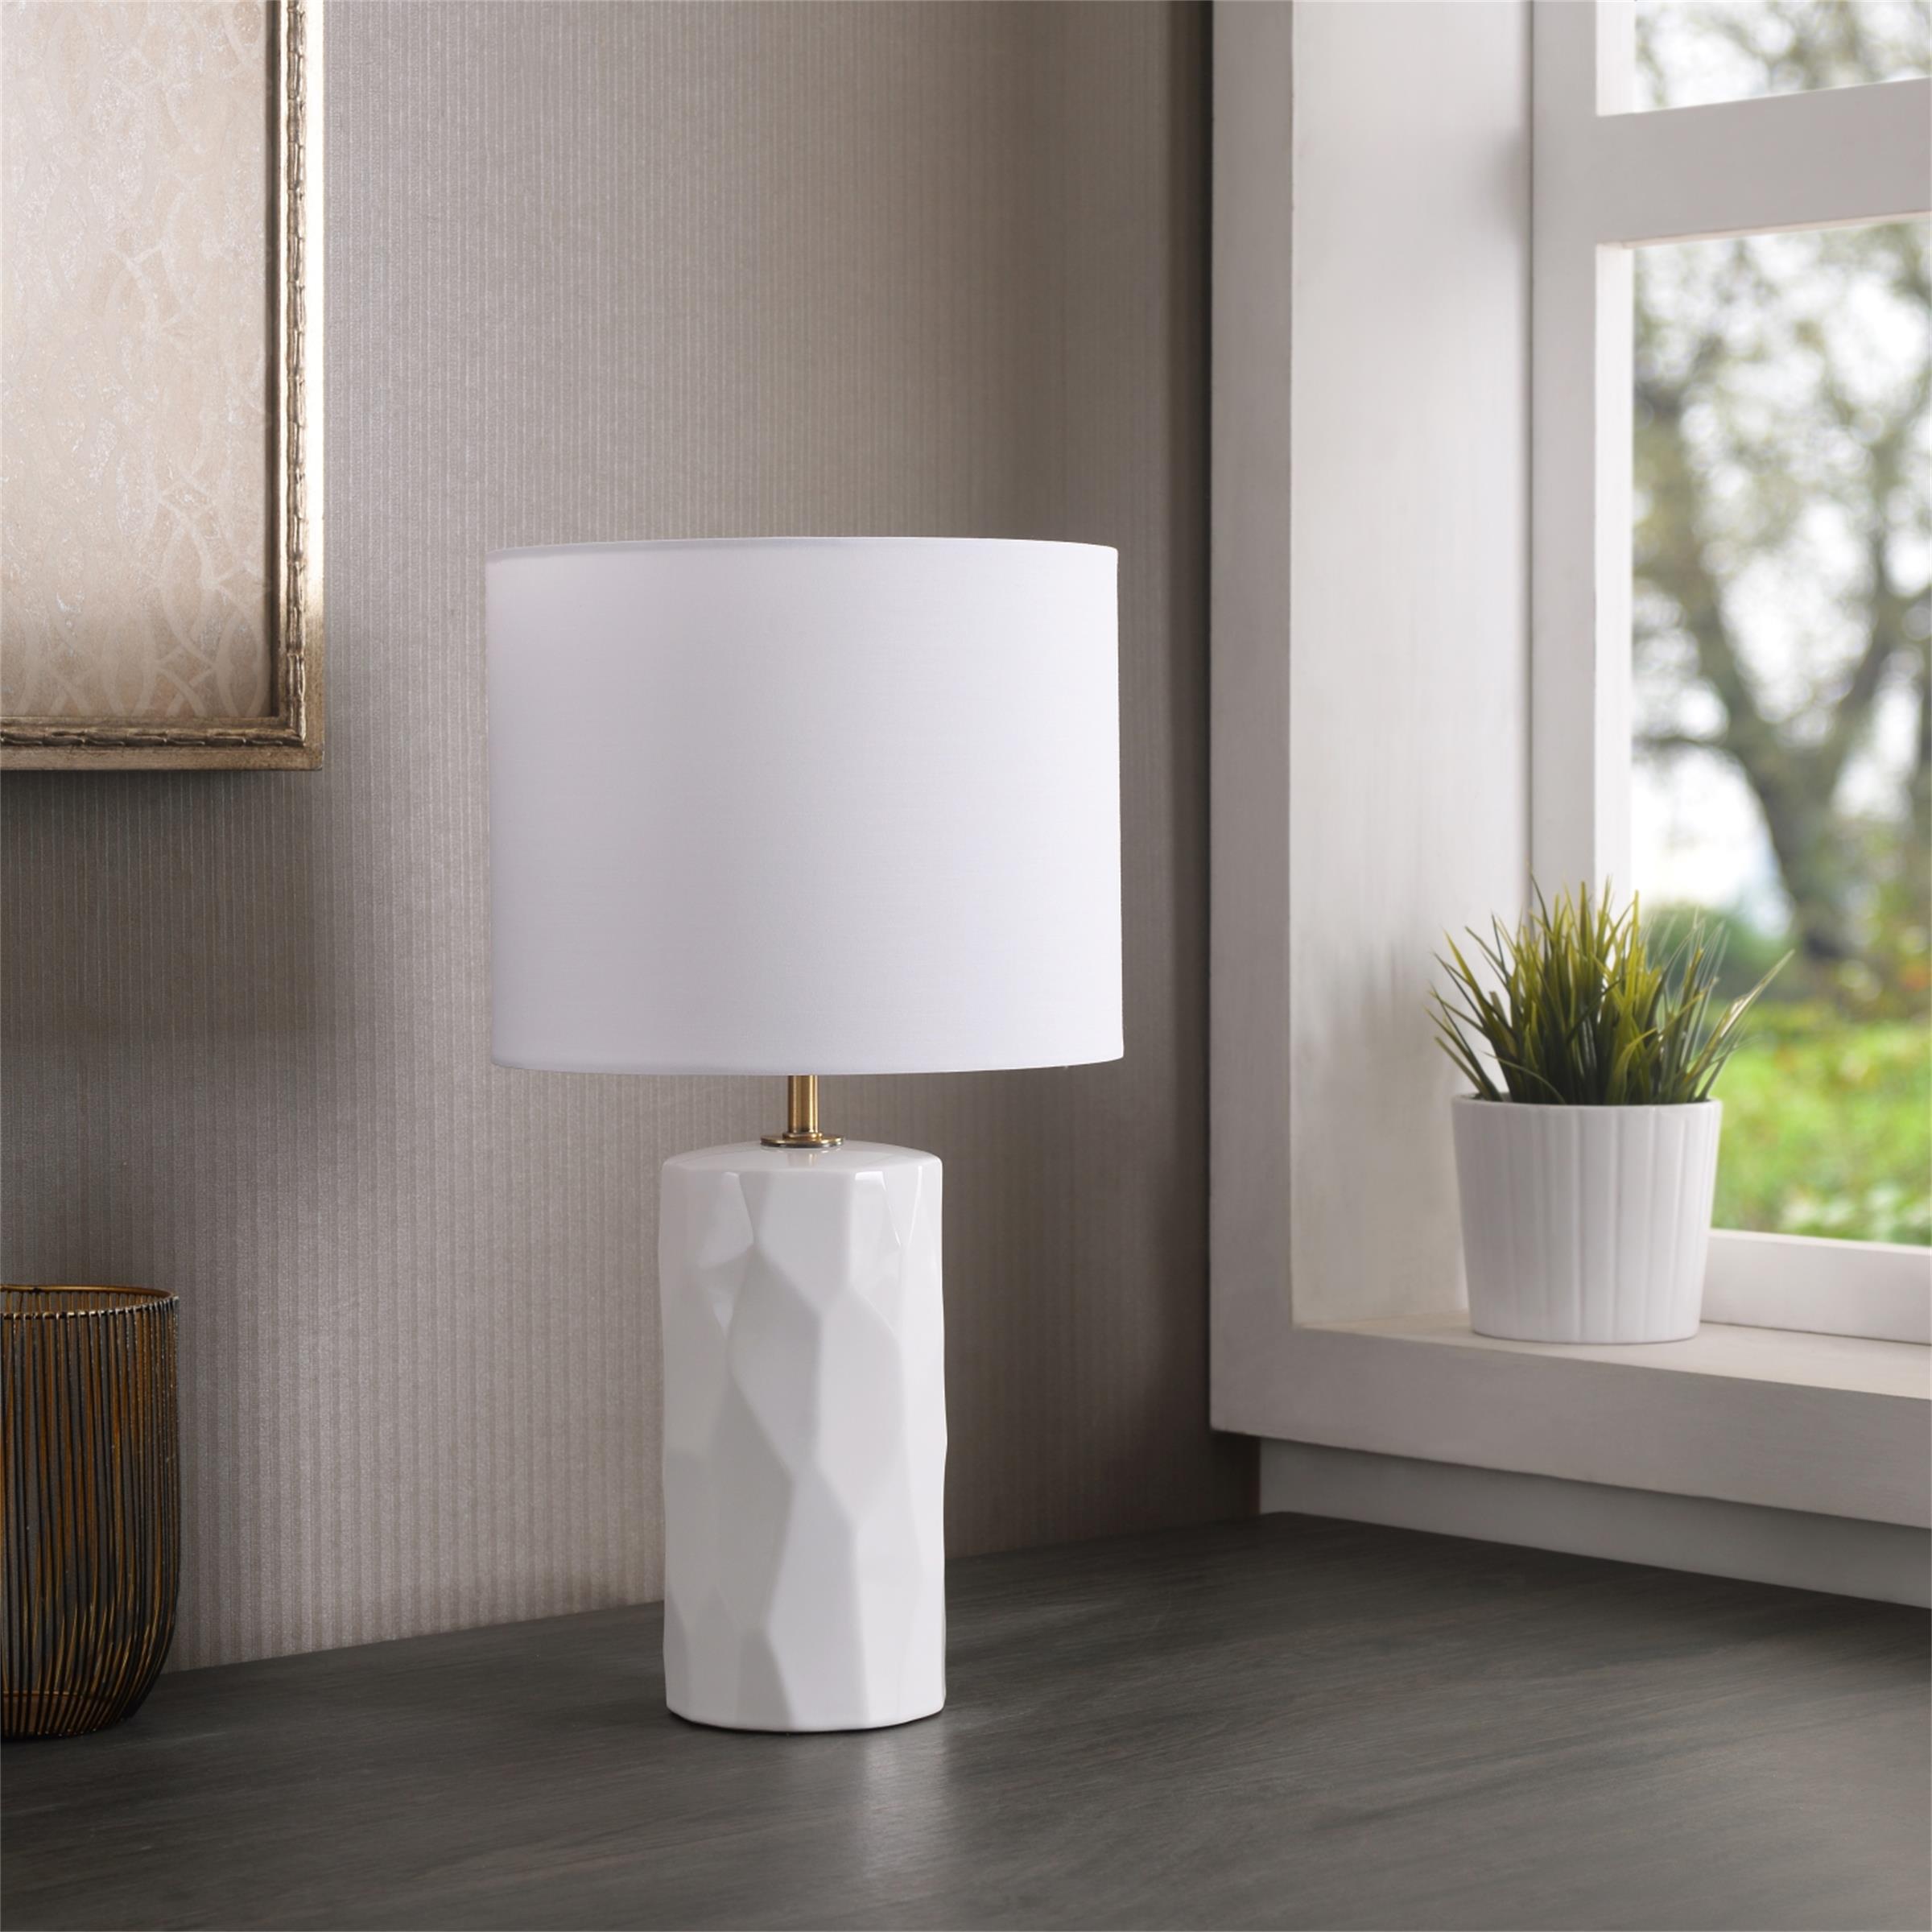 Mainstays White Ceramic Table Lamp, 17"H - image 2 of 6